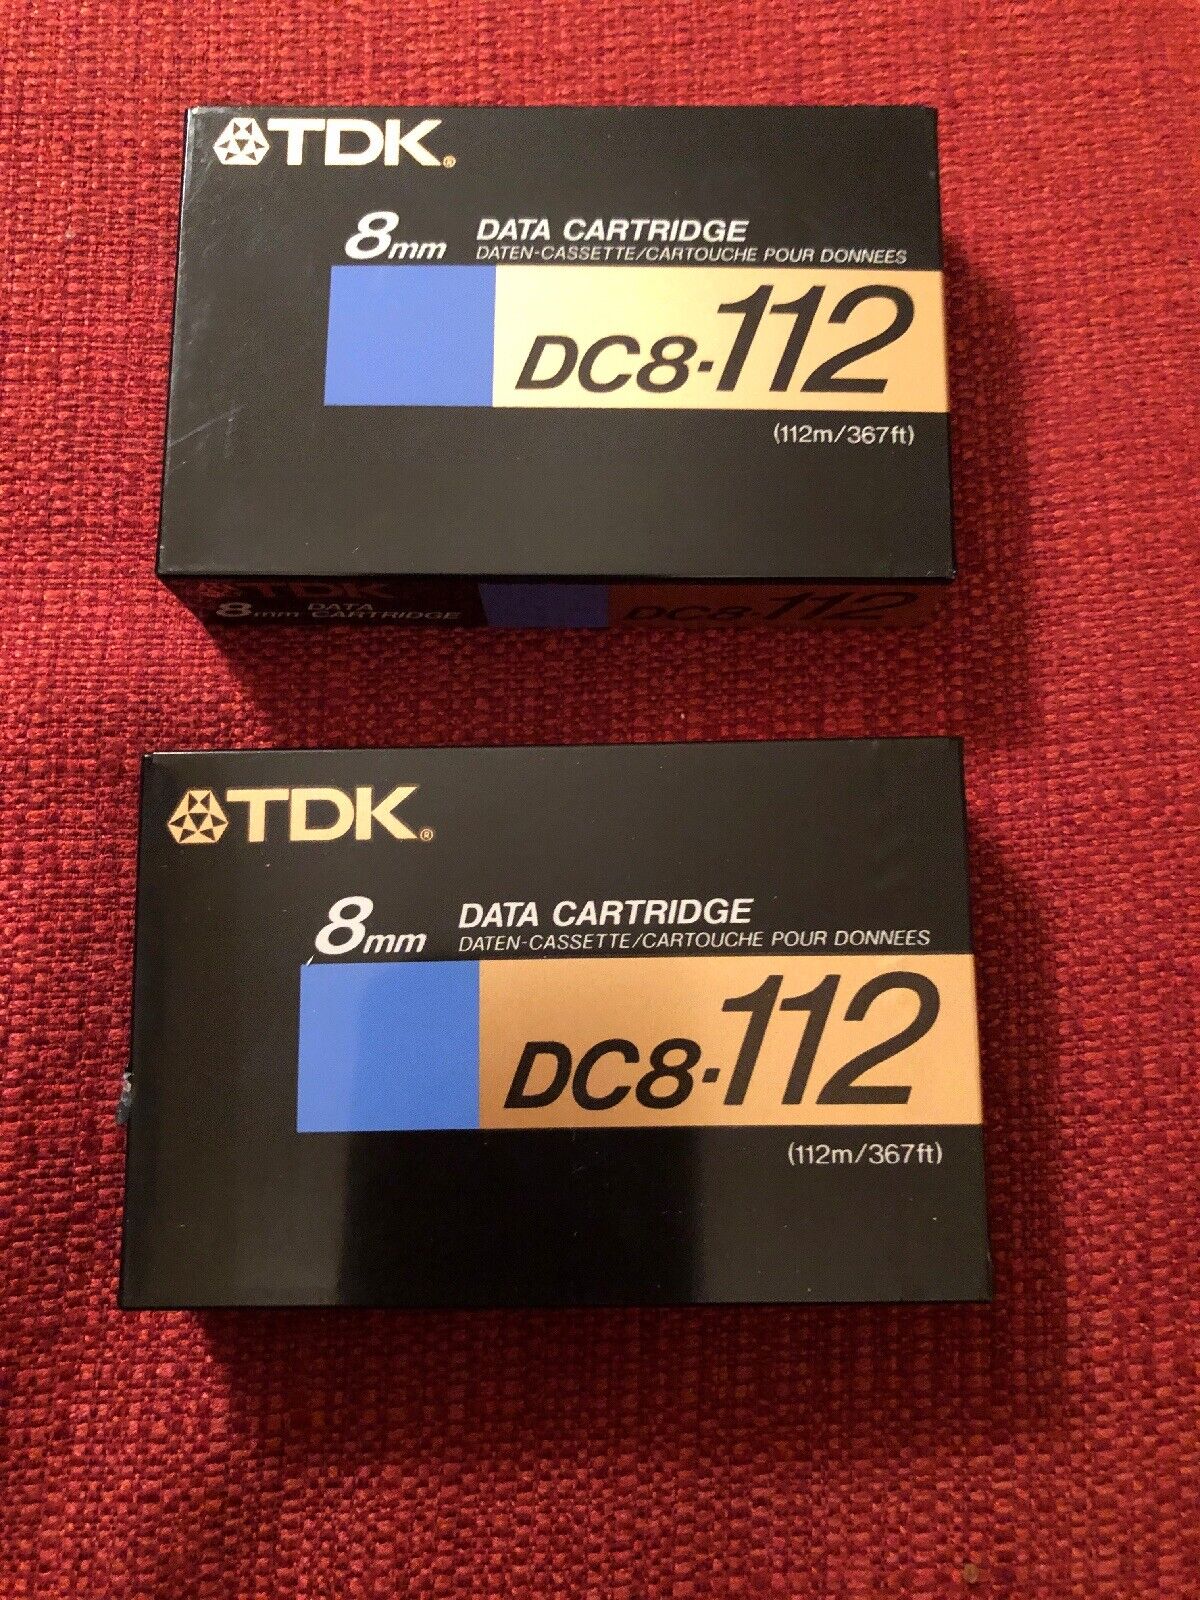 TDK 8mm Data Cartridge DC8-112 367ft (112m) 2 Tapes Sealed.